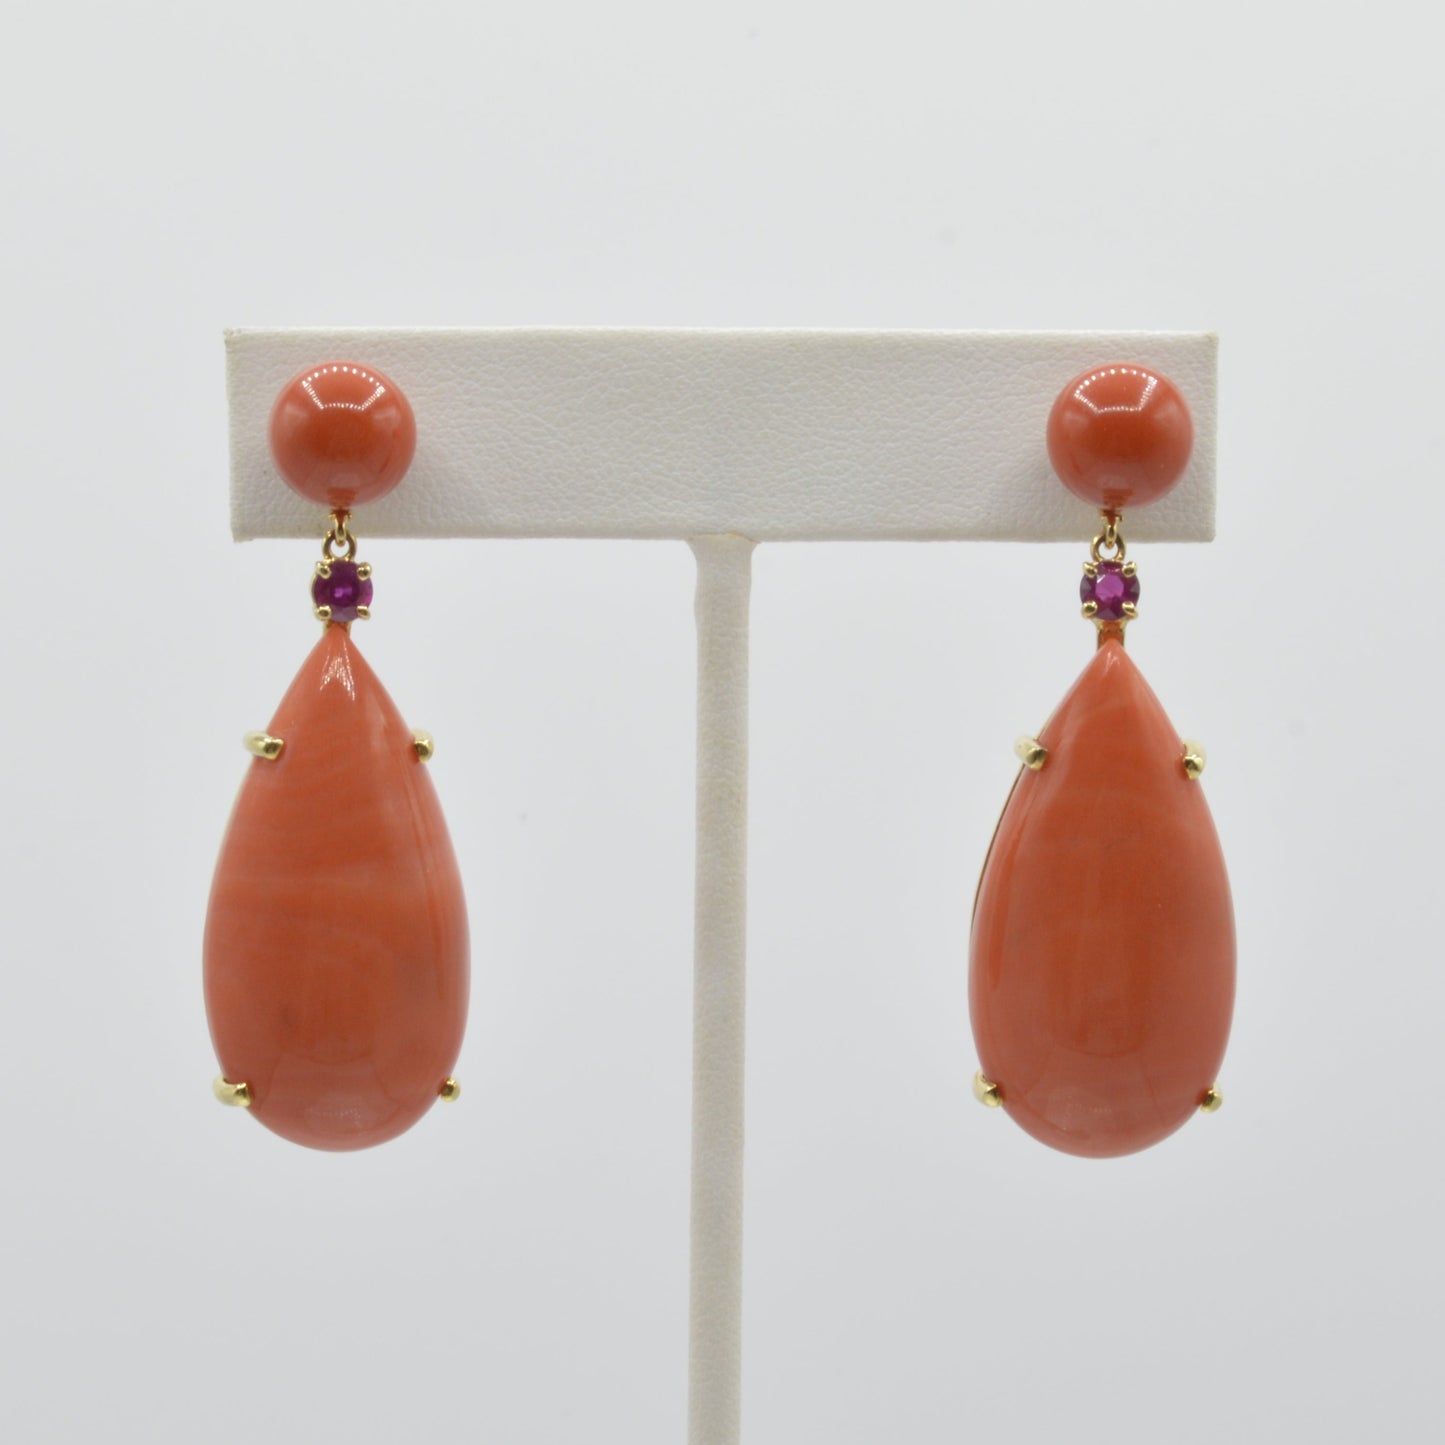 Ruby & Coral Teardrop Earrings